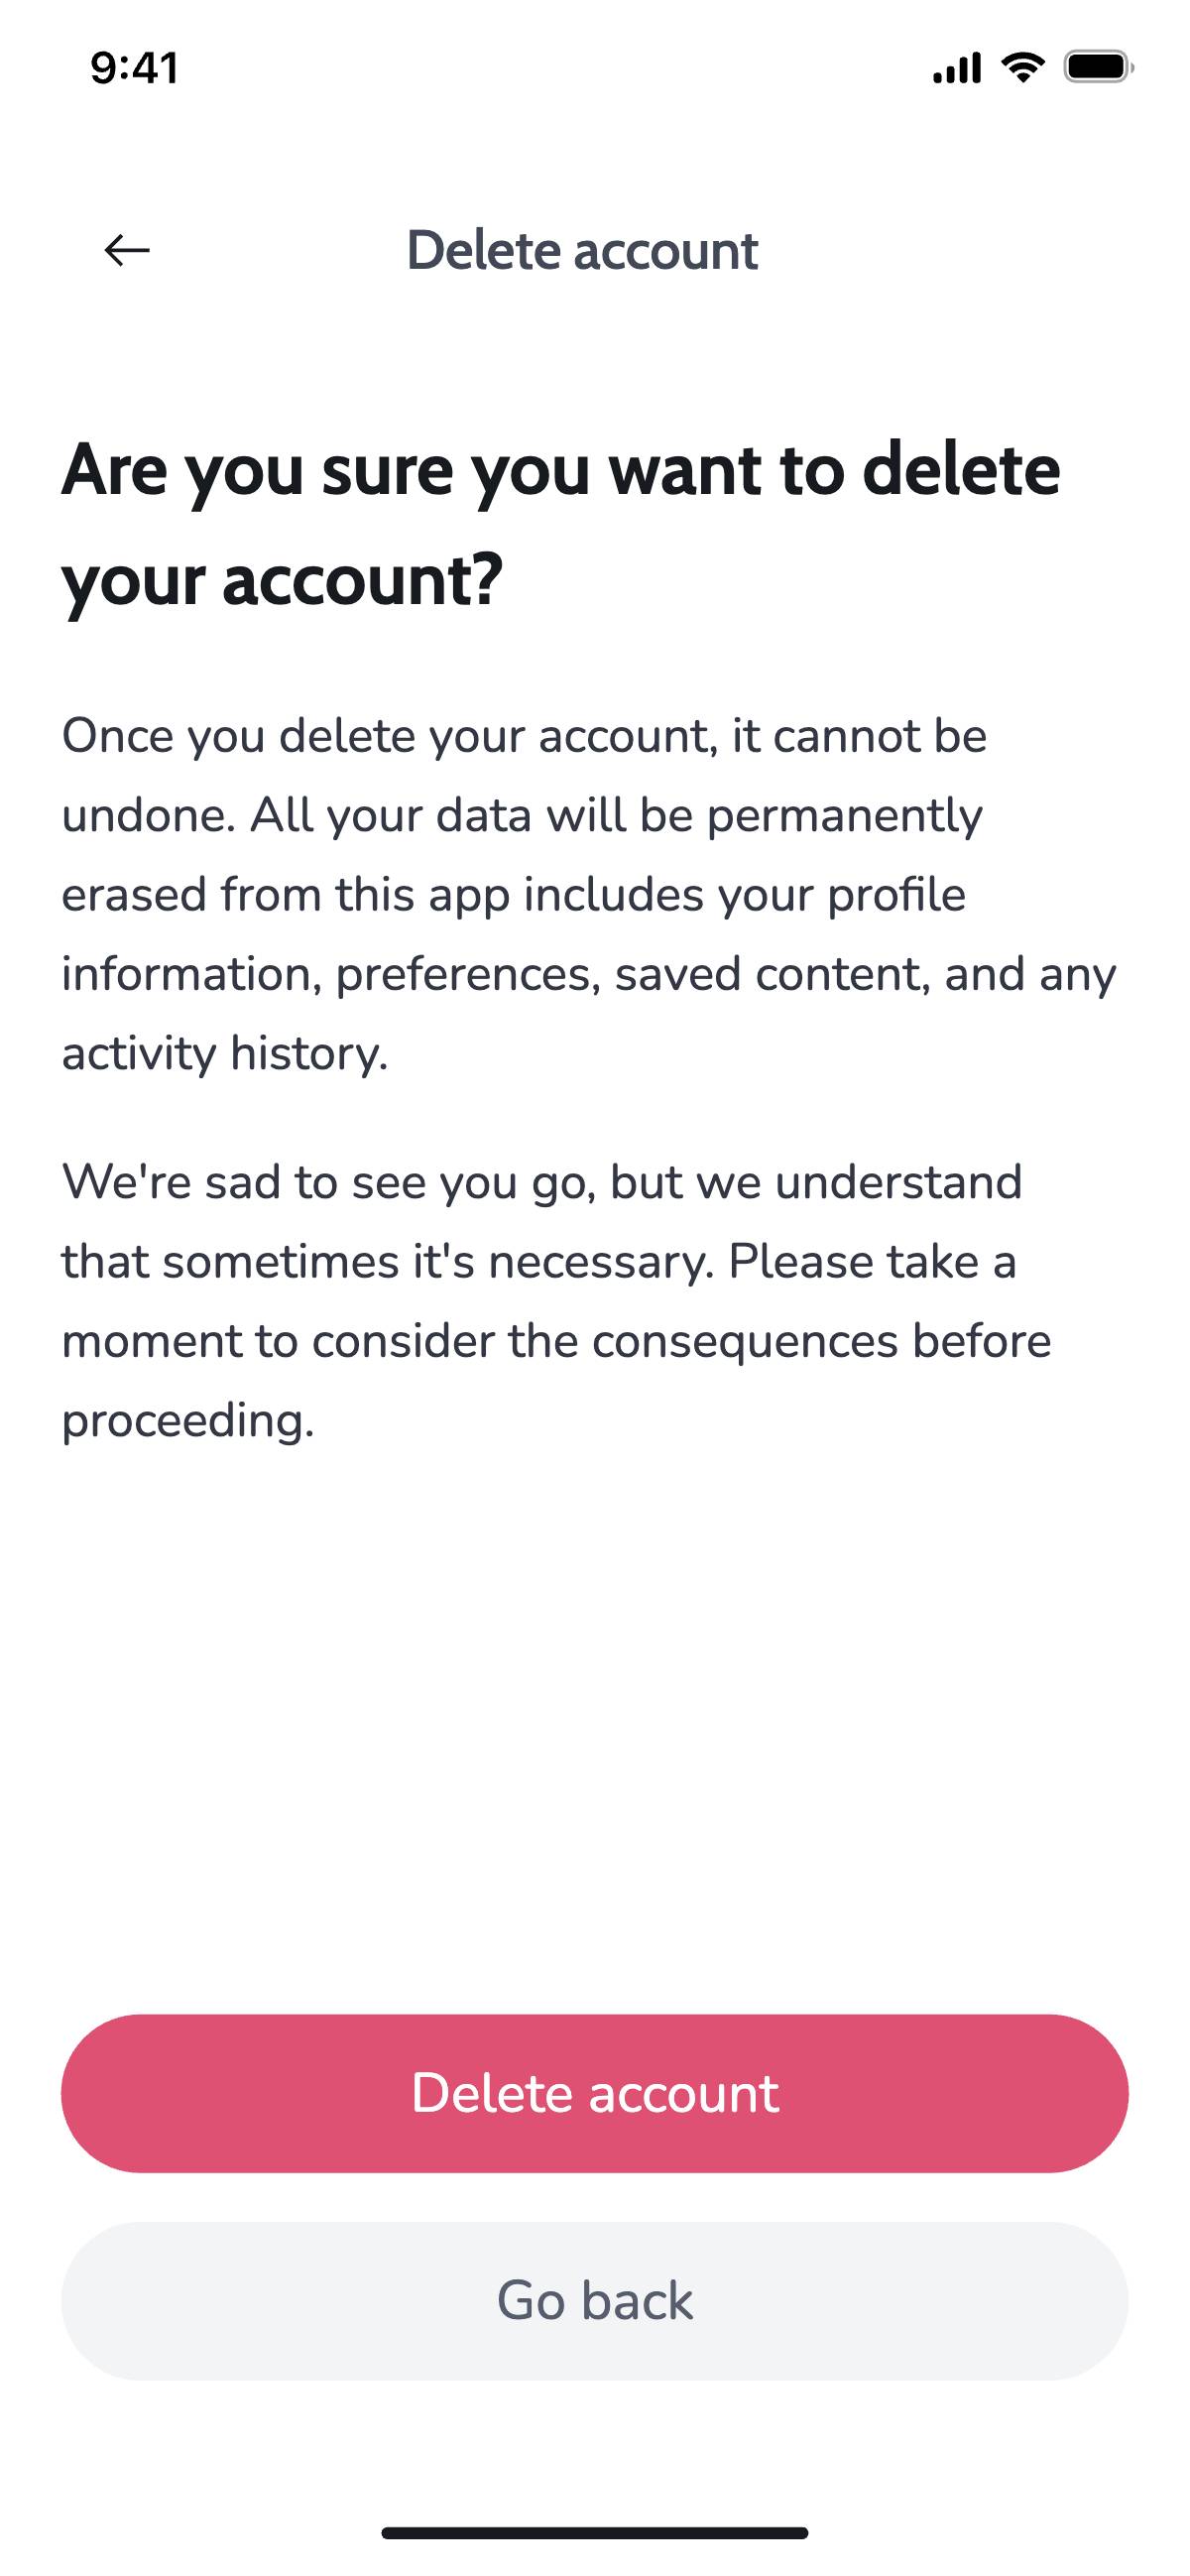 Delete account - Confirmation